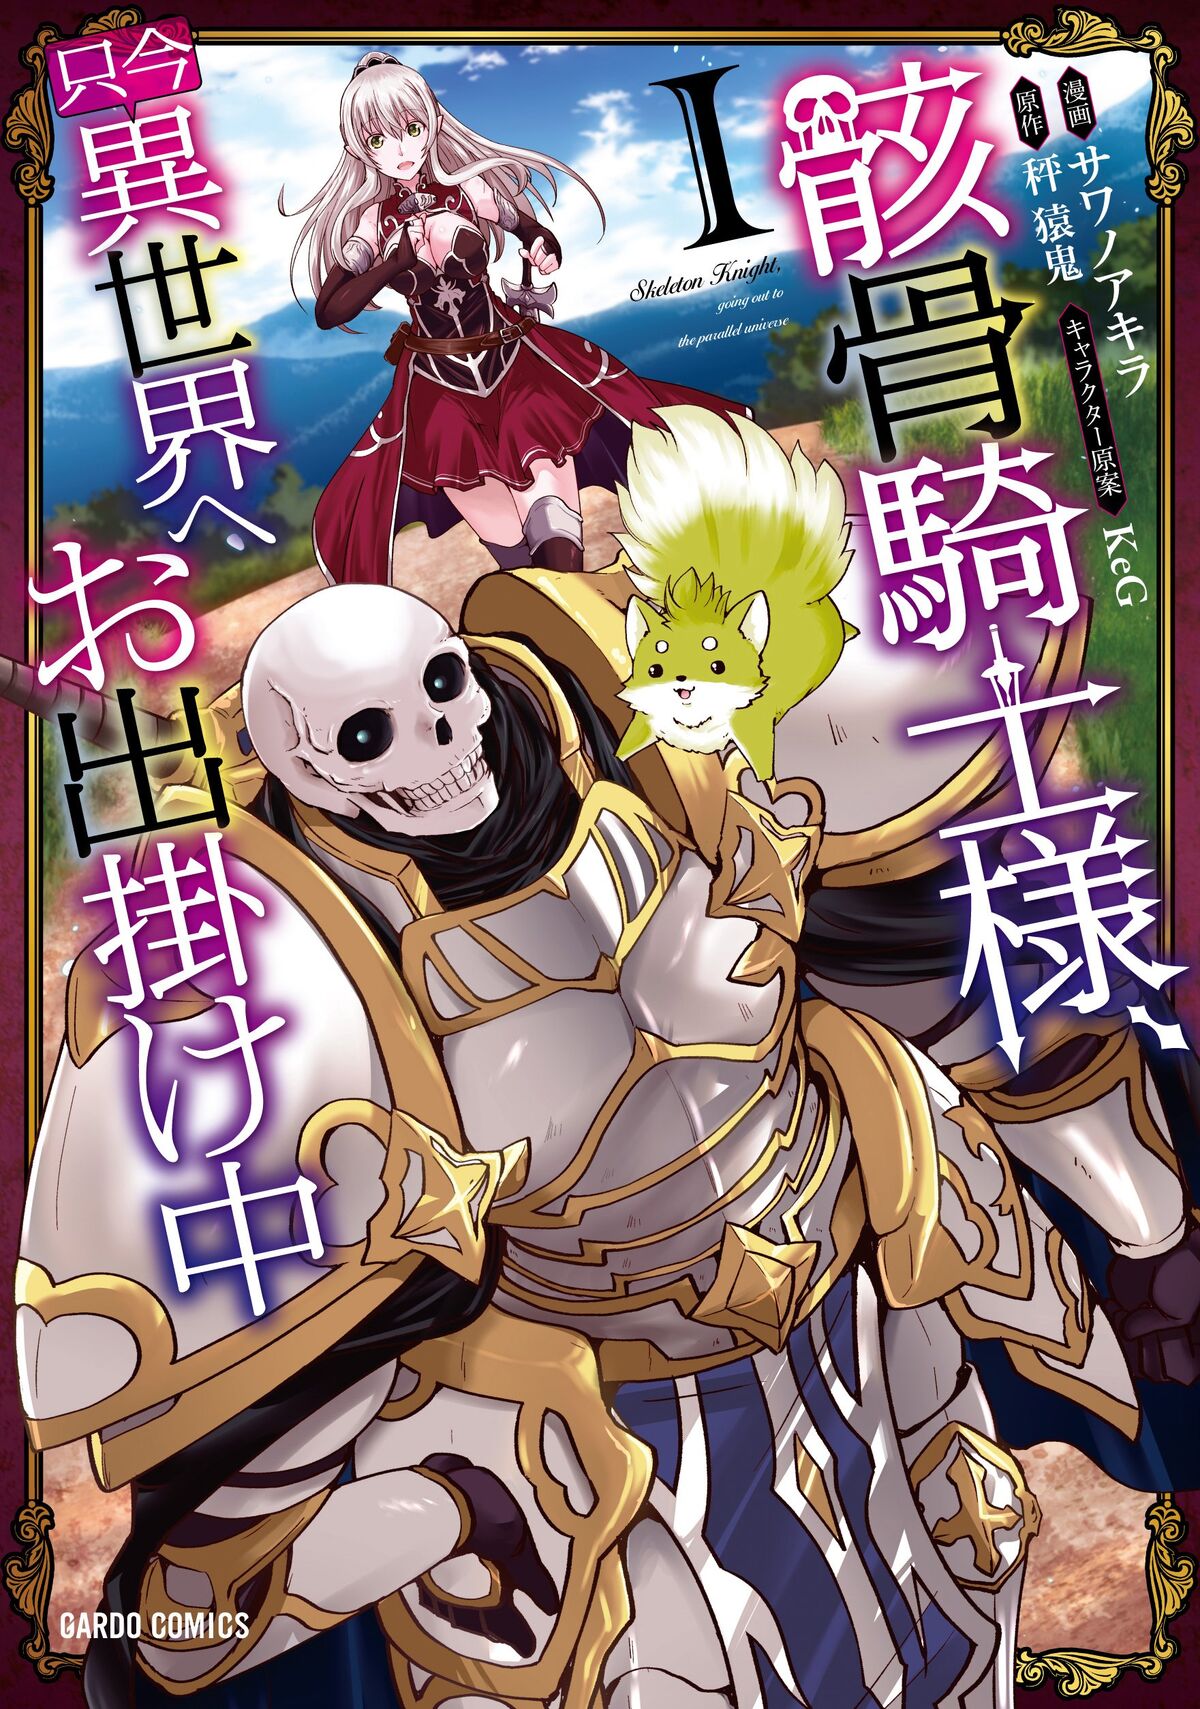 Skeleton Knight in Another World Light Novels Get TV Anime - News - Anime  News Network